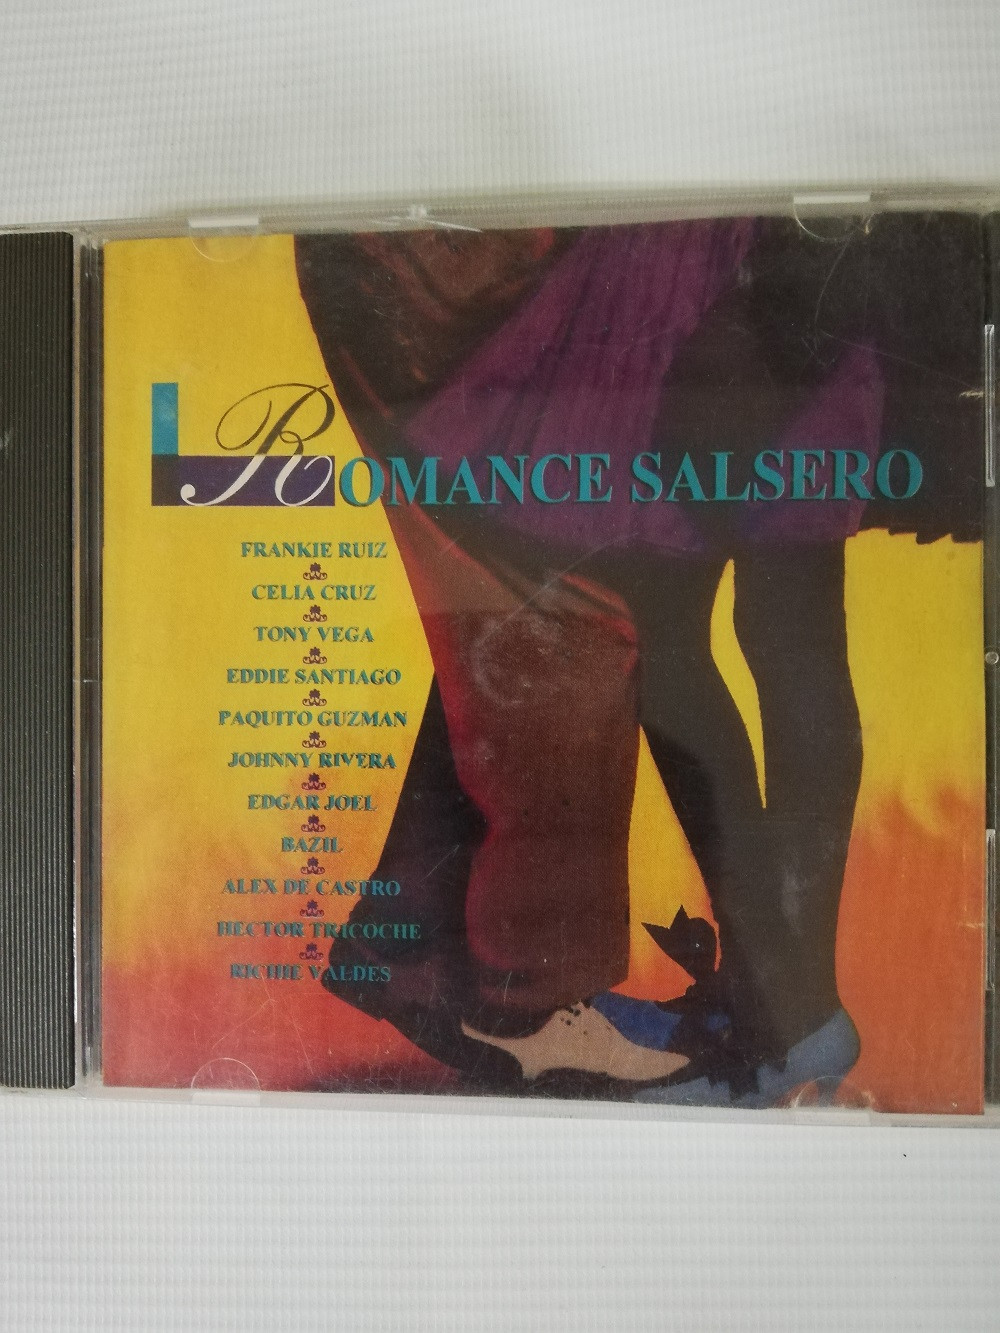 Imagen CD ROMANCE SALSERO - VARIOS INTÉRPRETES